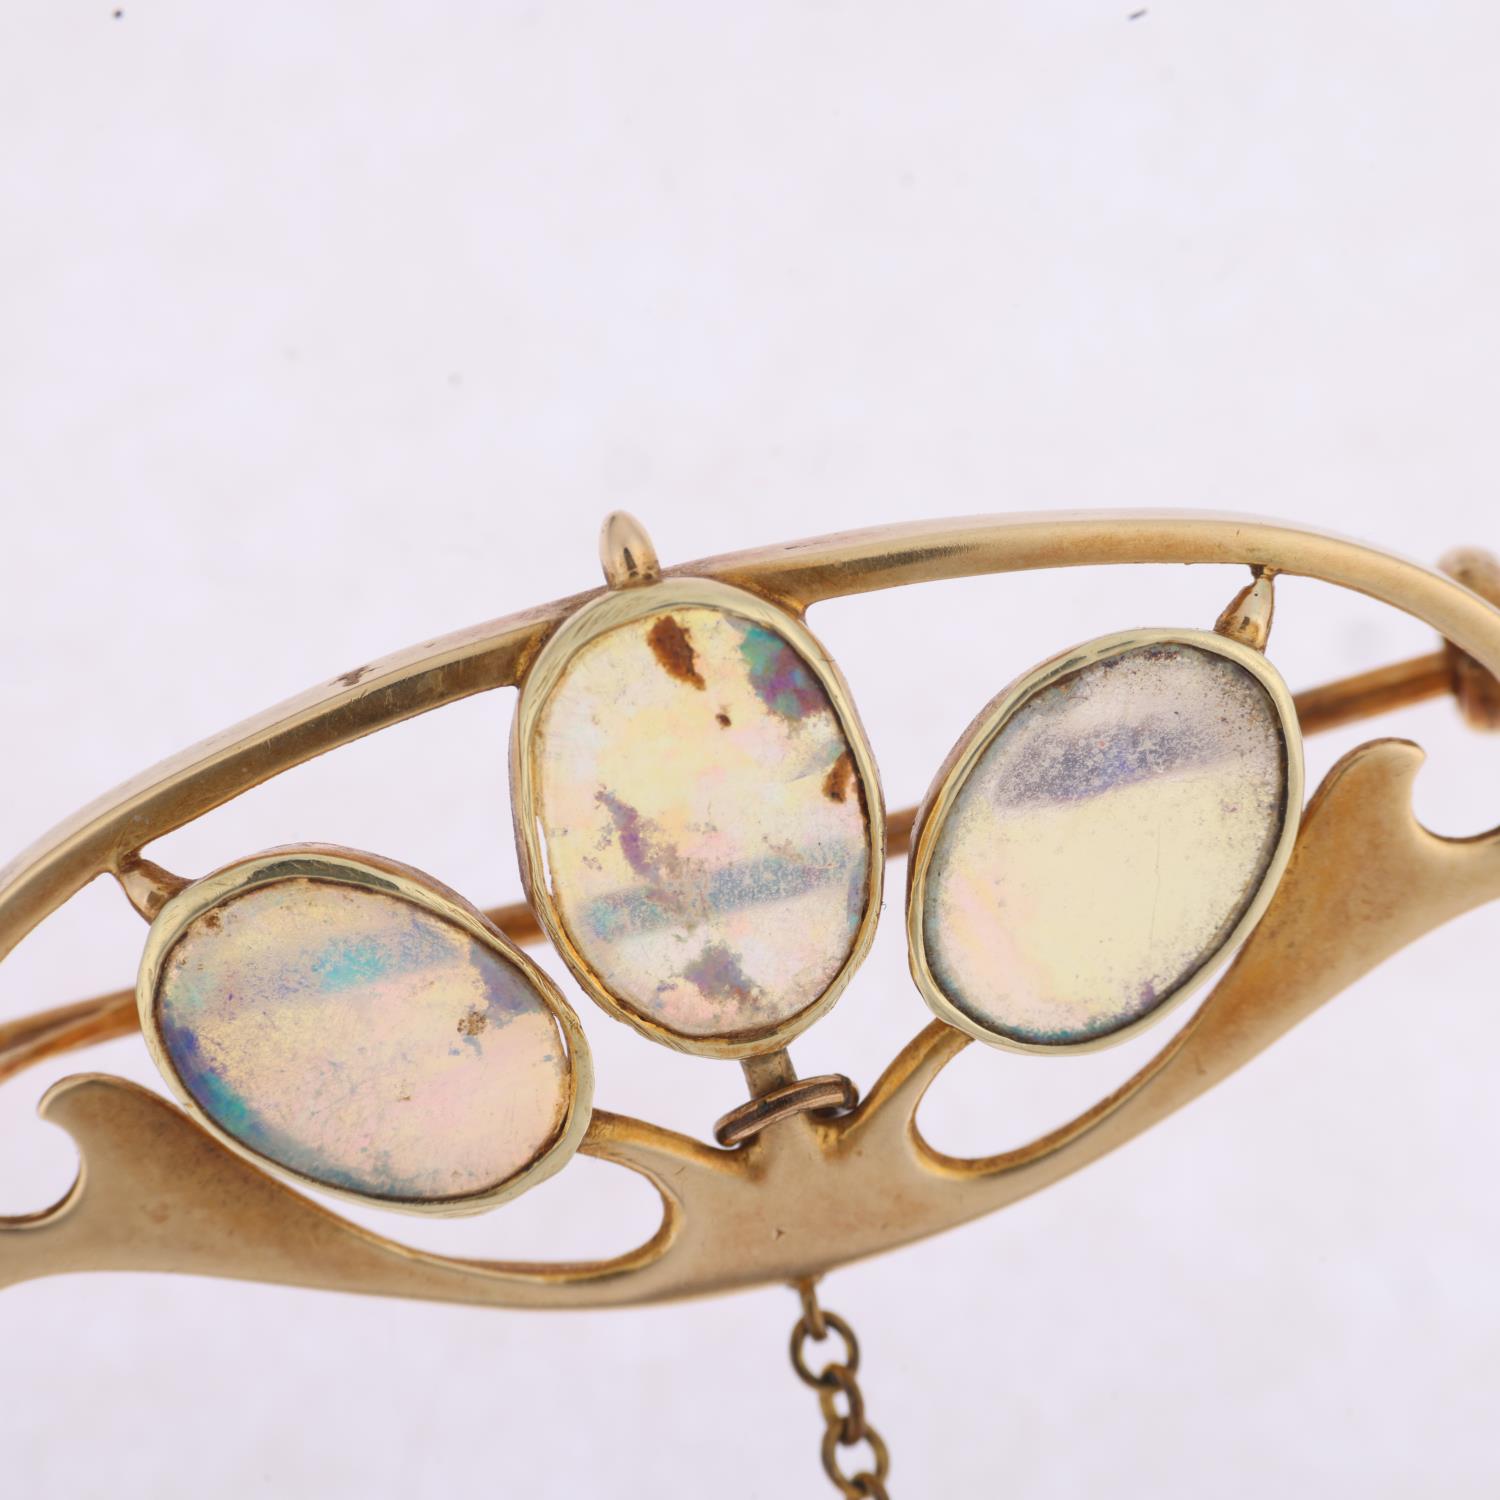 MURRLE BENNETT - an Art Nouveau 15ct gold opal openwork brooch, circa 1905, rub-over set with oval - Image 2 of 4